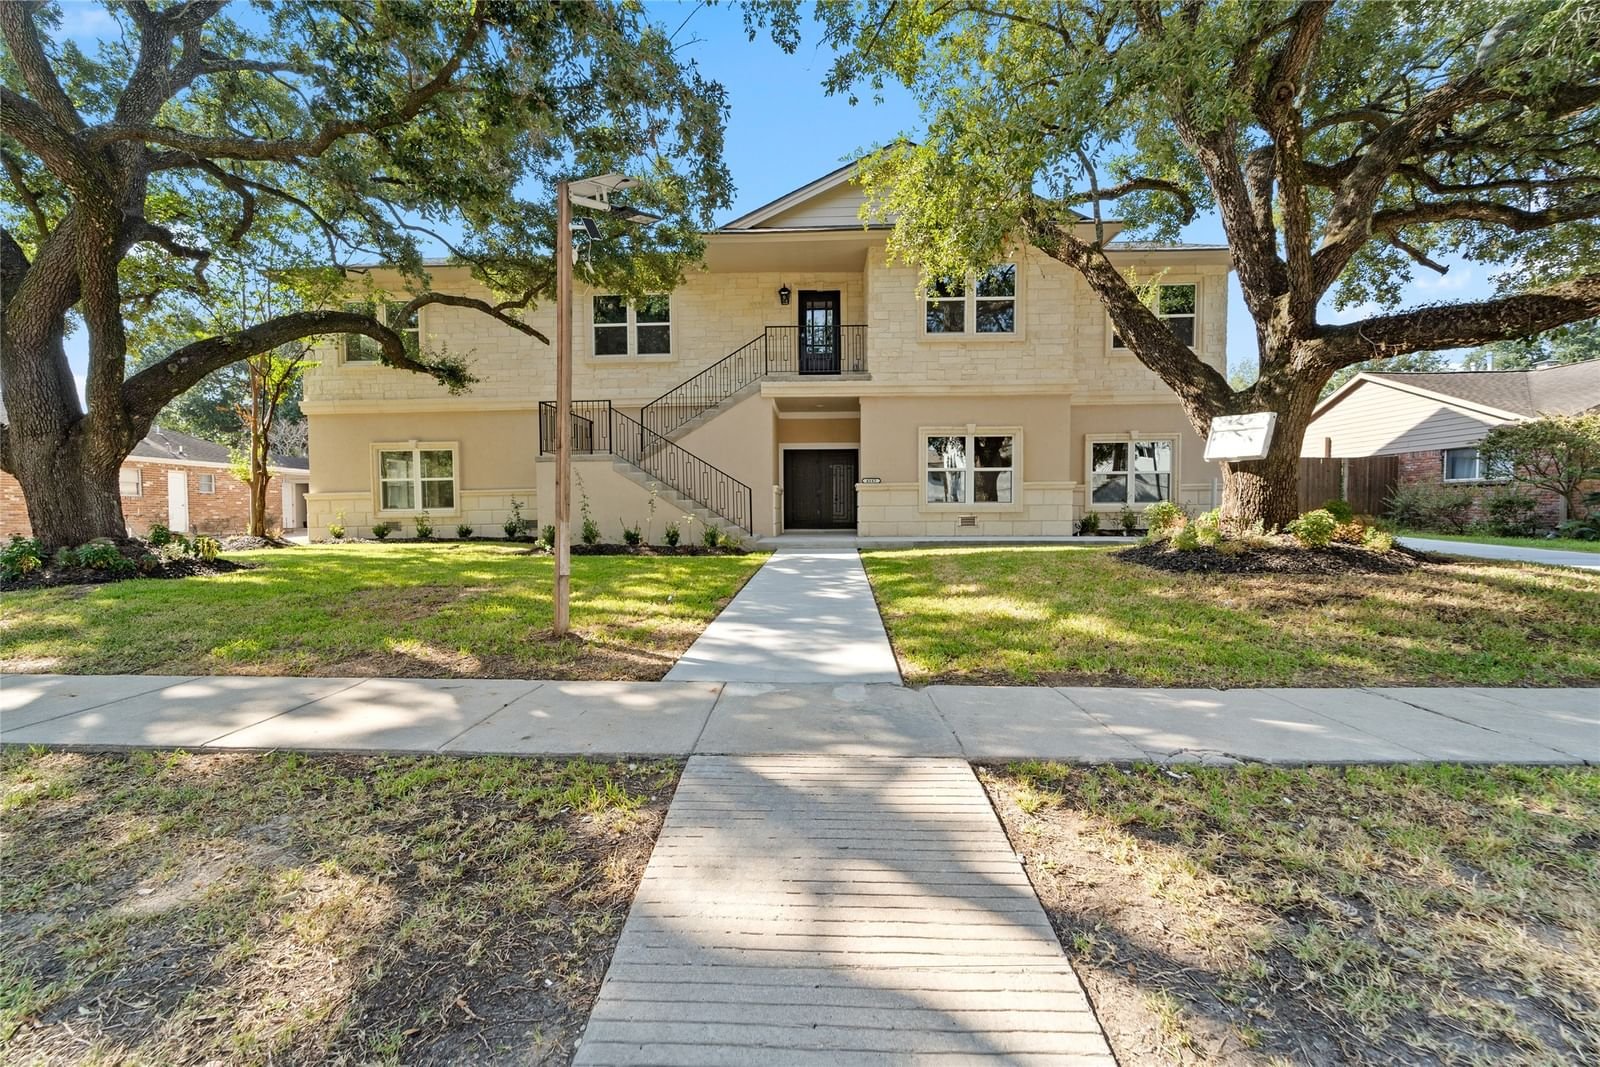 Real estate property located at 4943 Braesheather, Harris, Meyerland Sec 07 Rep C, Houston, TX, US